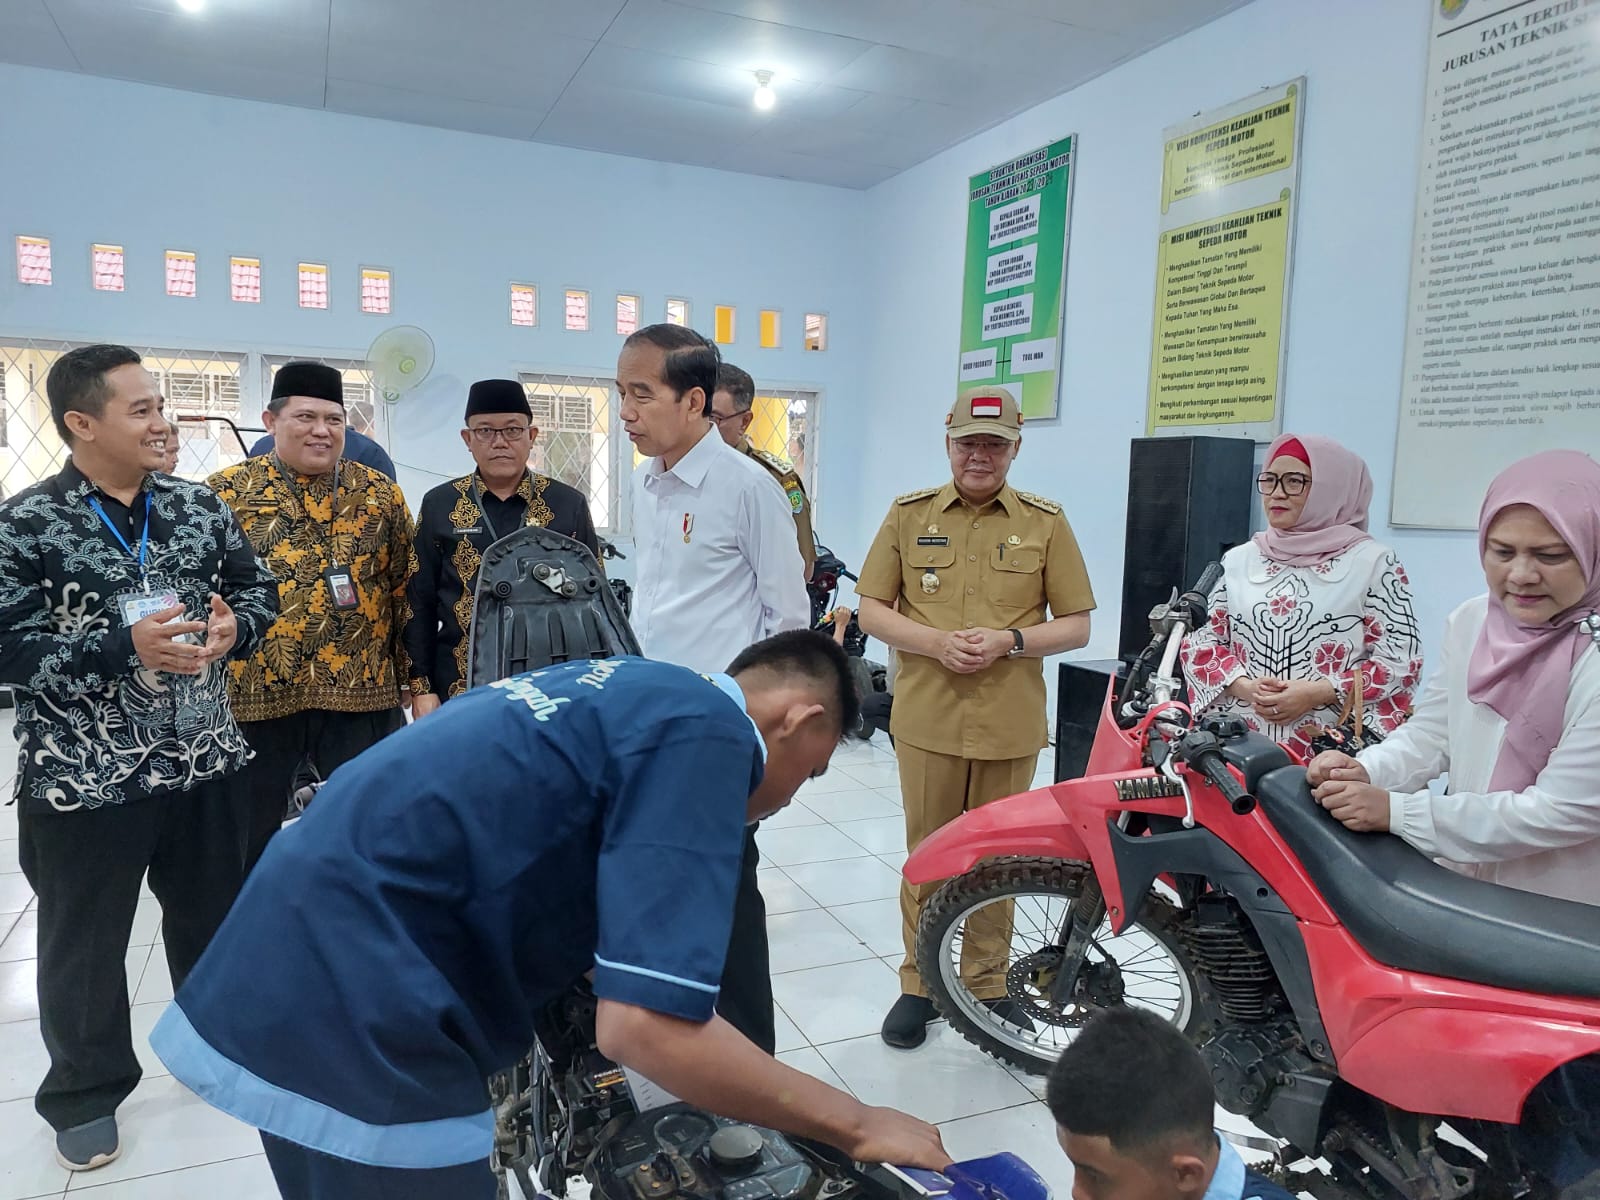 BREAKING NEWS, Presiden RI Bersama Menteri PUPR Tinjau SMKN 2 Bengkulu Tengah